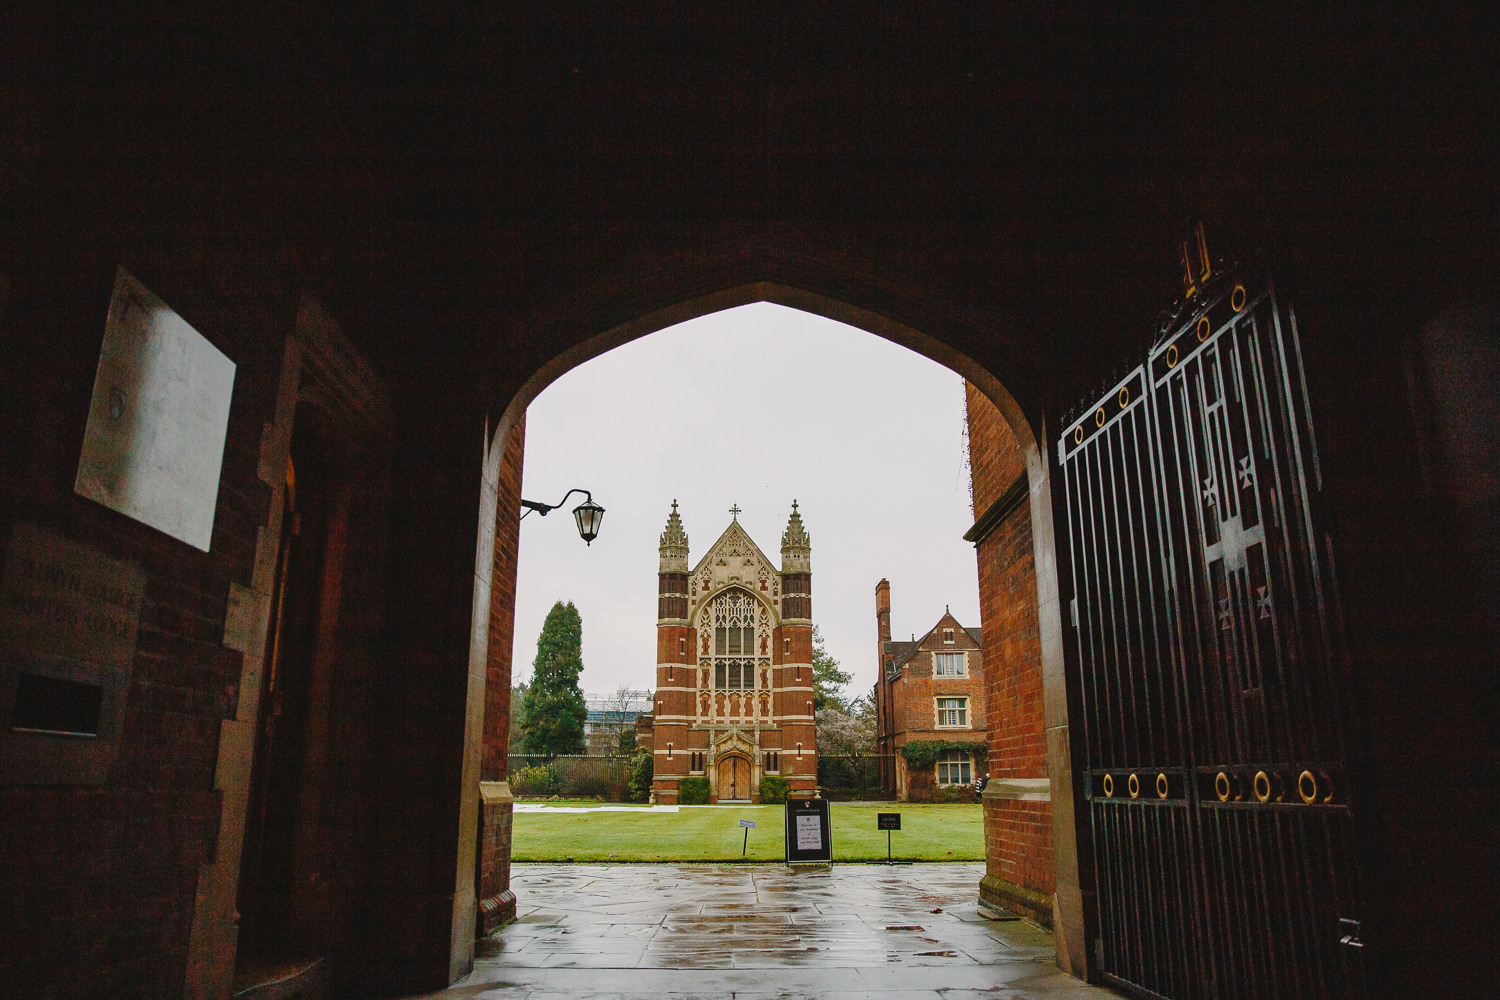 Selwyn Cambridge University College chapel framed by an archway